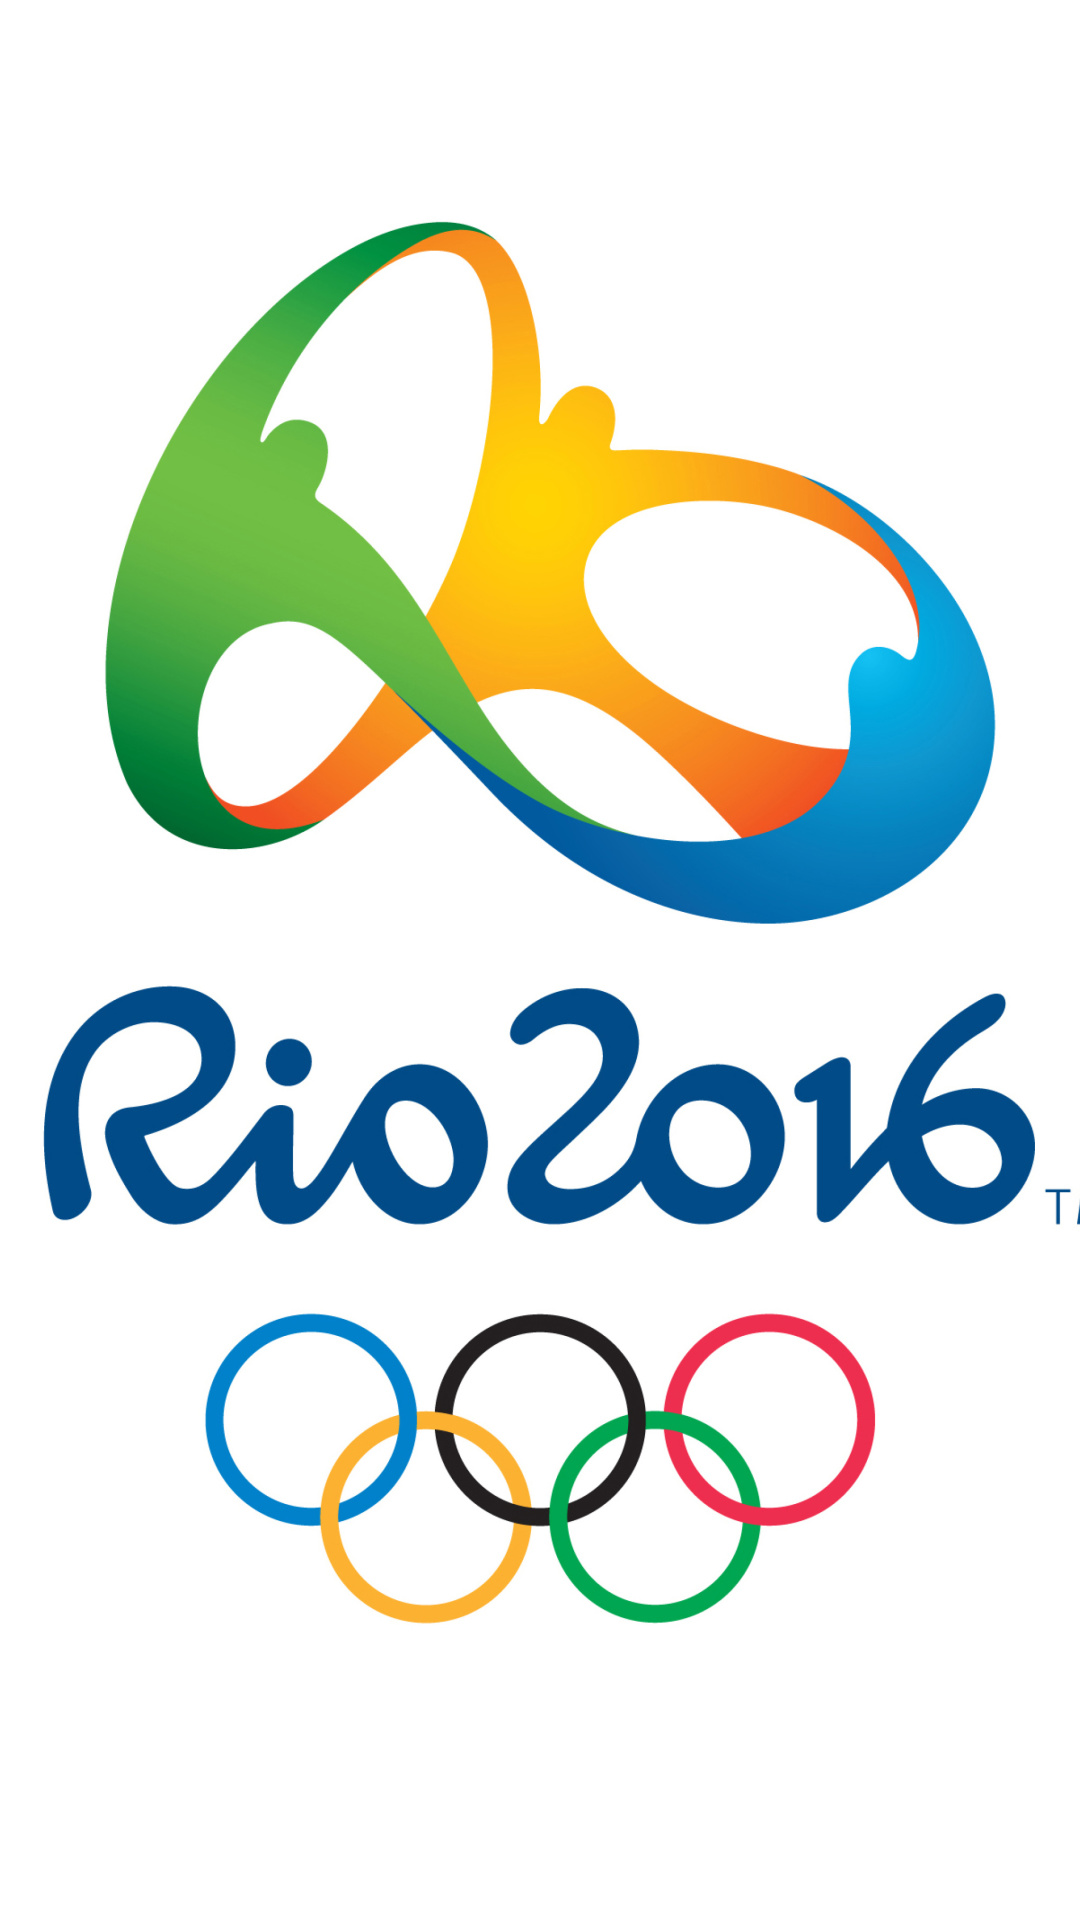 Rio 2016 Olympics Games wallpaper 1080x1920